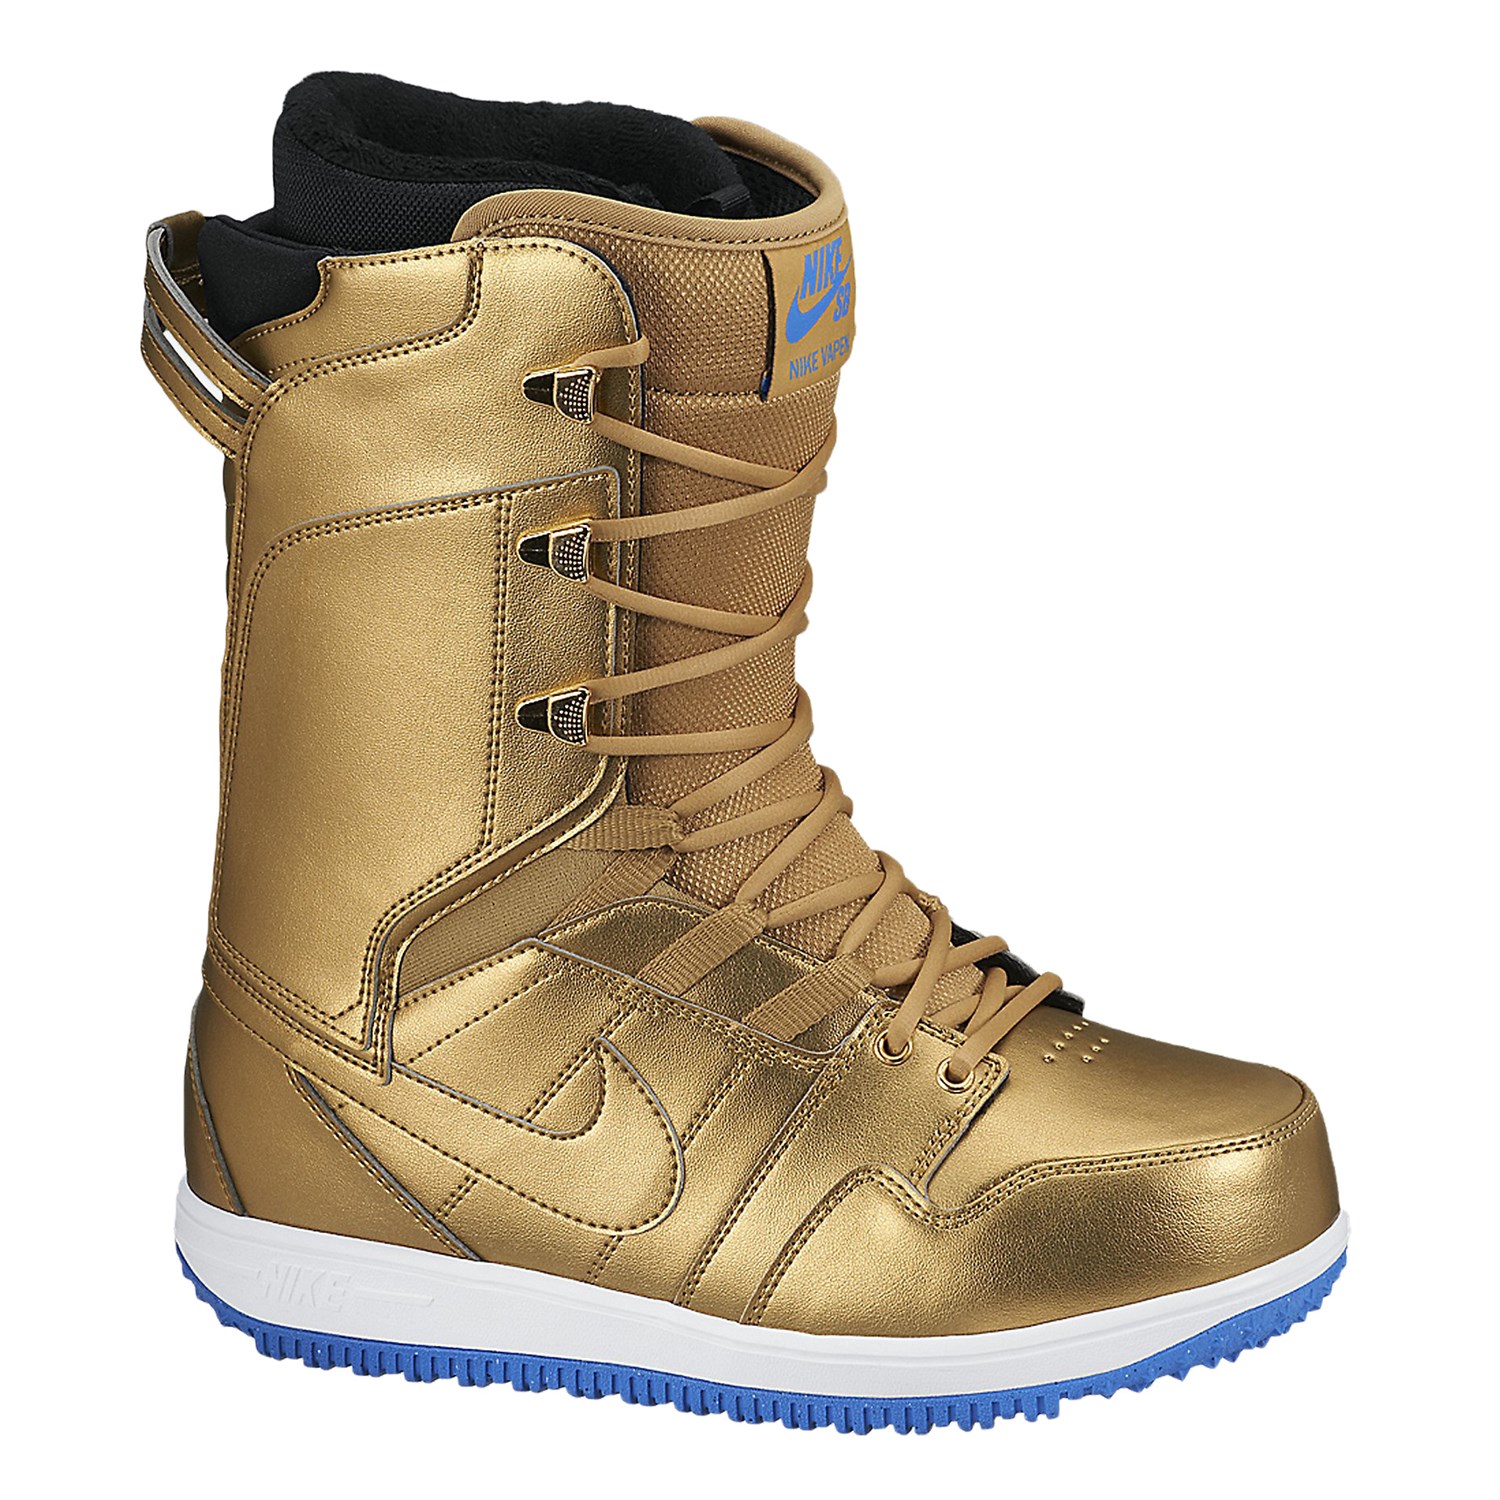 nike-sb-vapen-snowboard-boots-women-s-2015-metallic-gold-white-lt-photo-blue-metallic-gold-detail-1